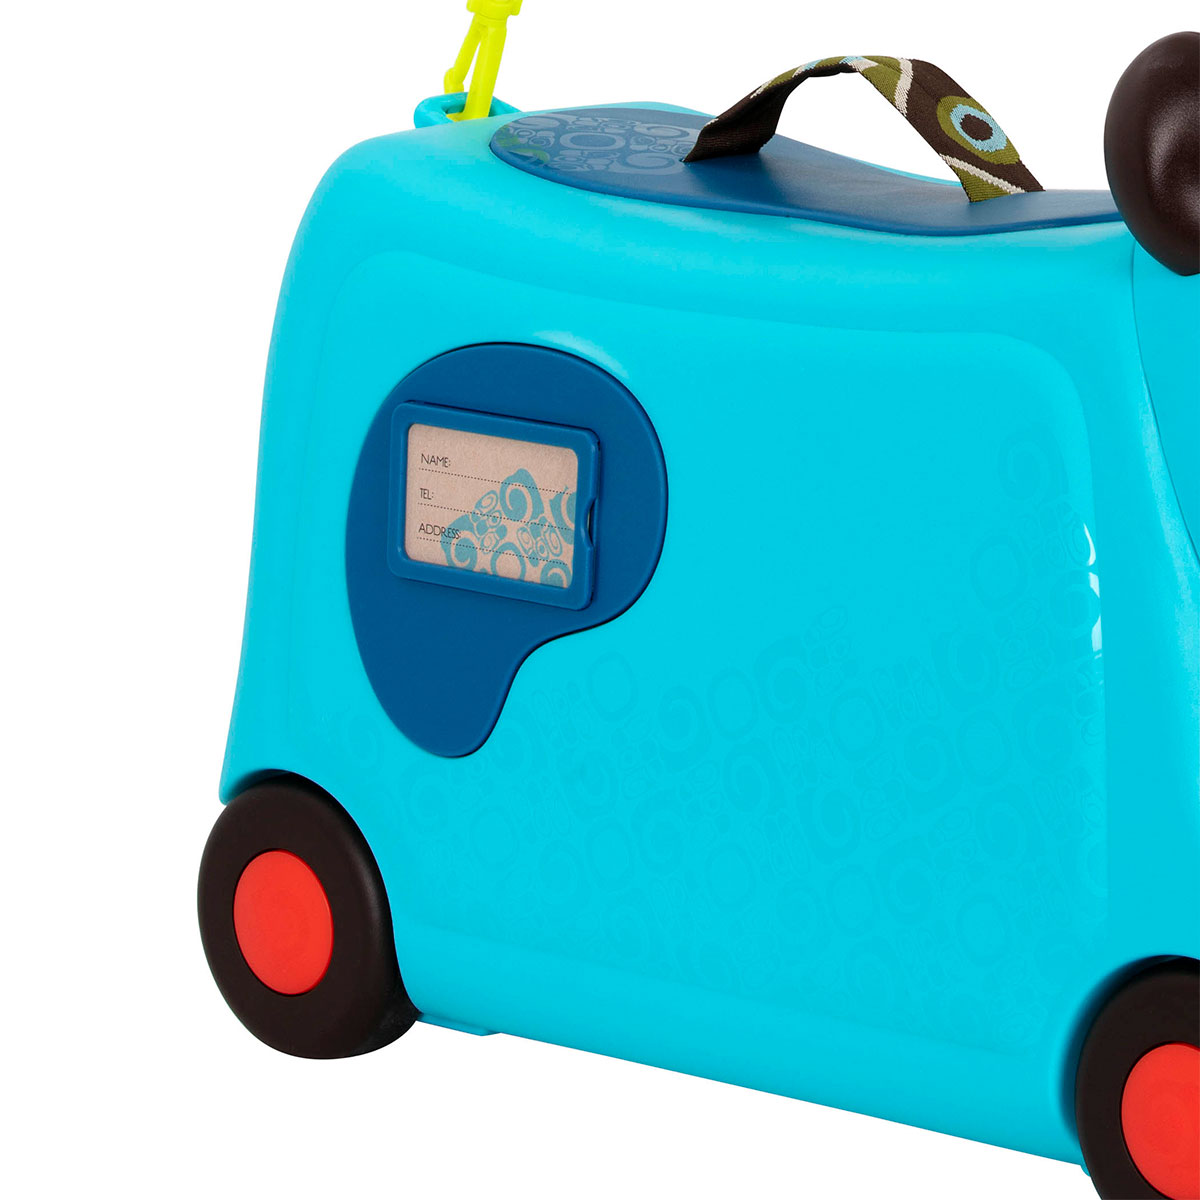 Детский чемодан-каталка для путешествий Battat Песик-турист (BX1572Z)